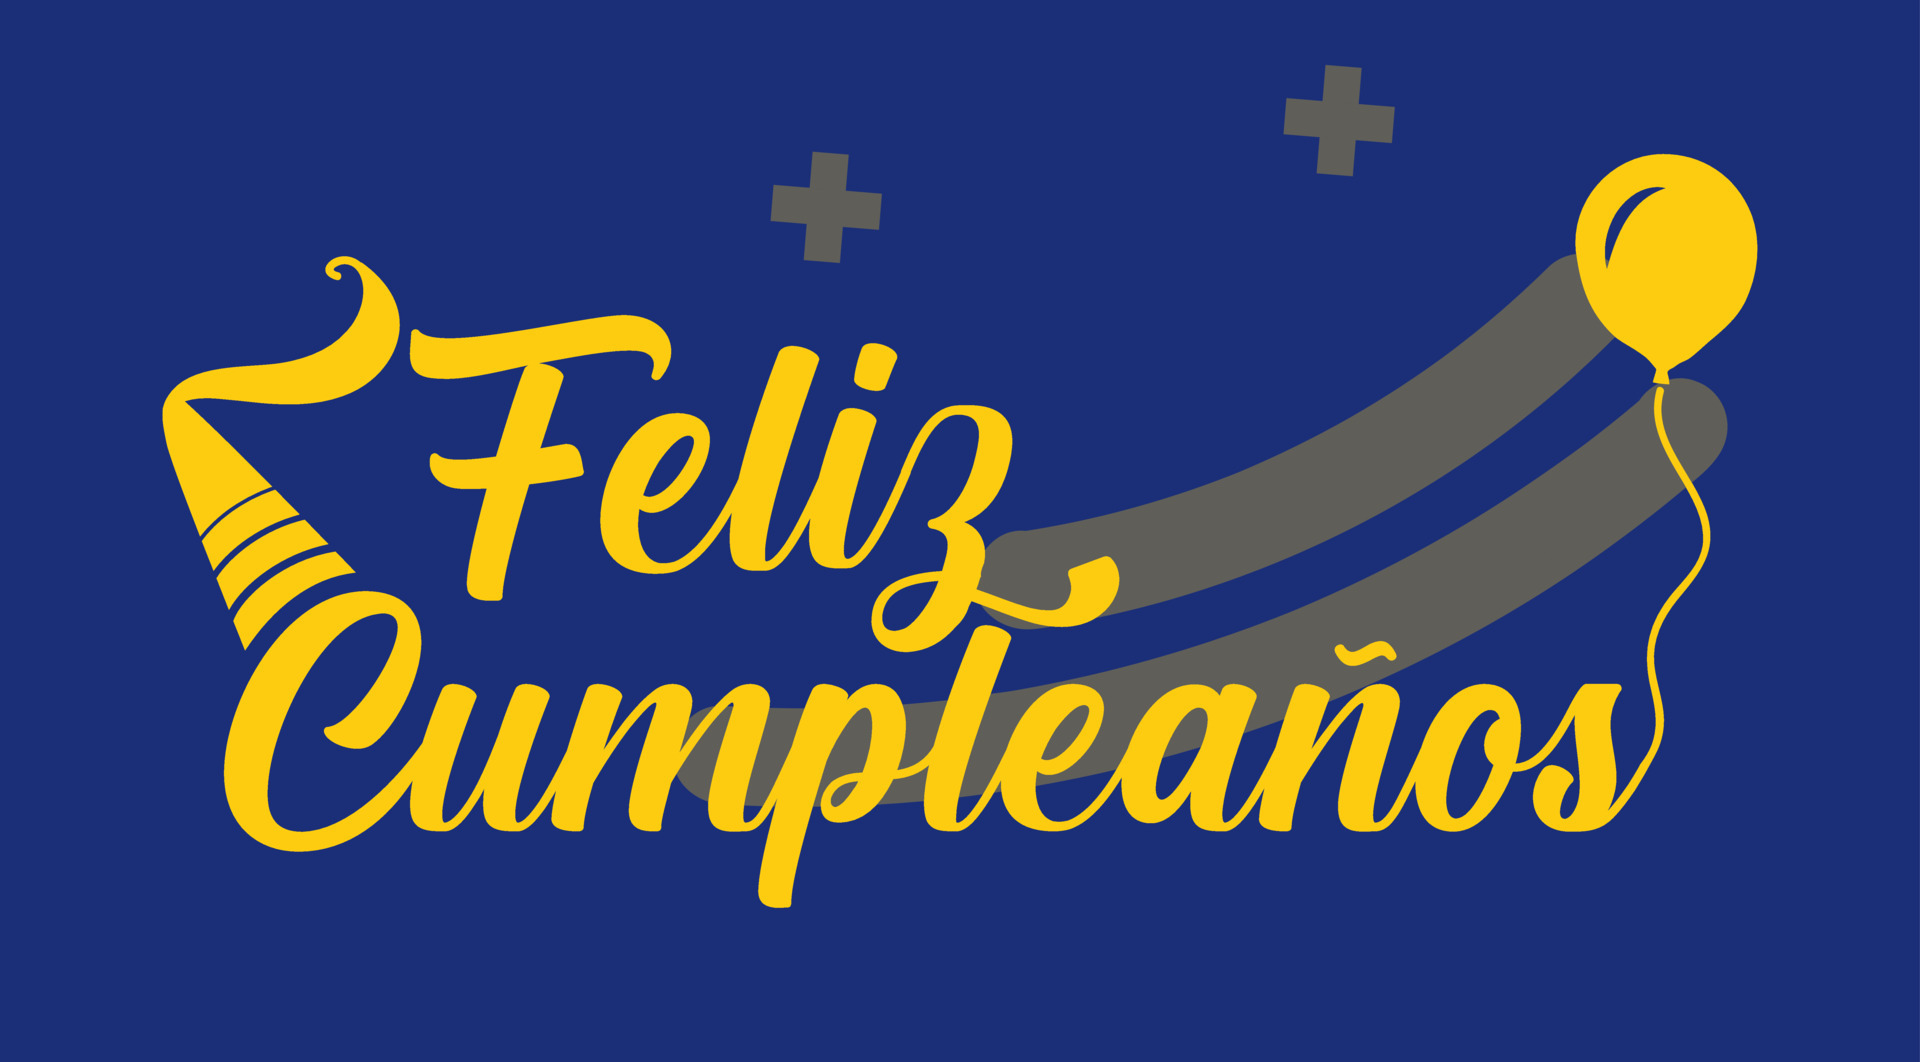 Feliz cumpleanos happy birthday in spanish card Vector Image